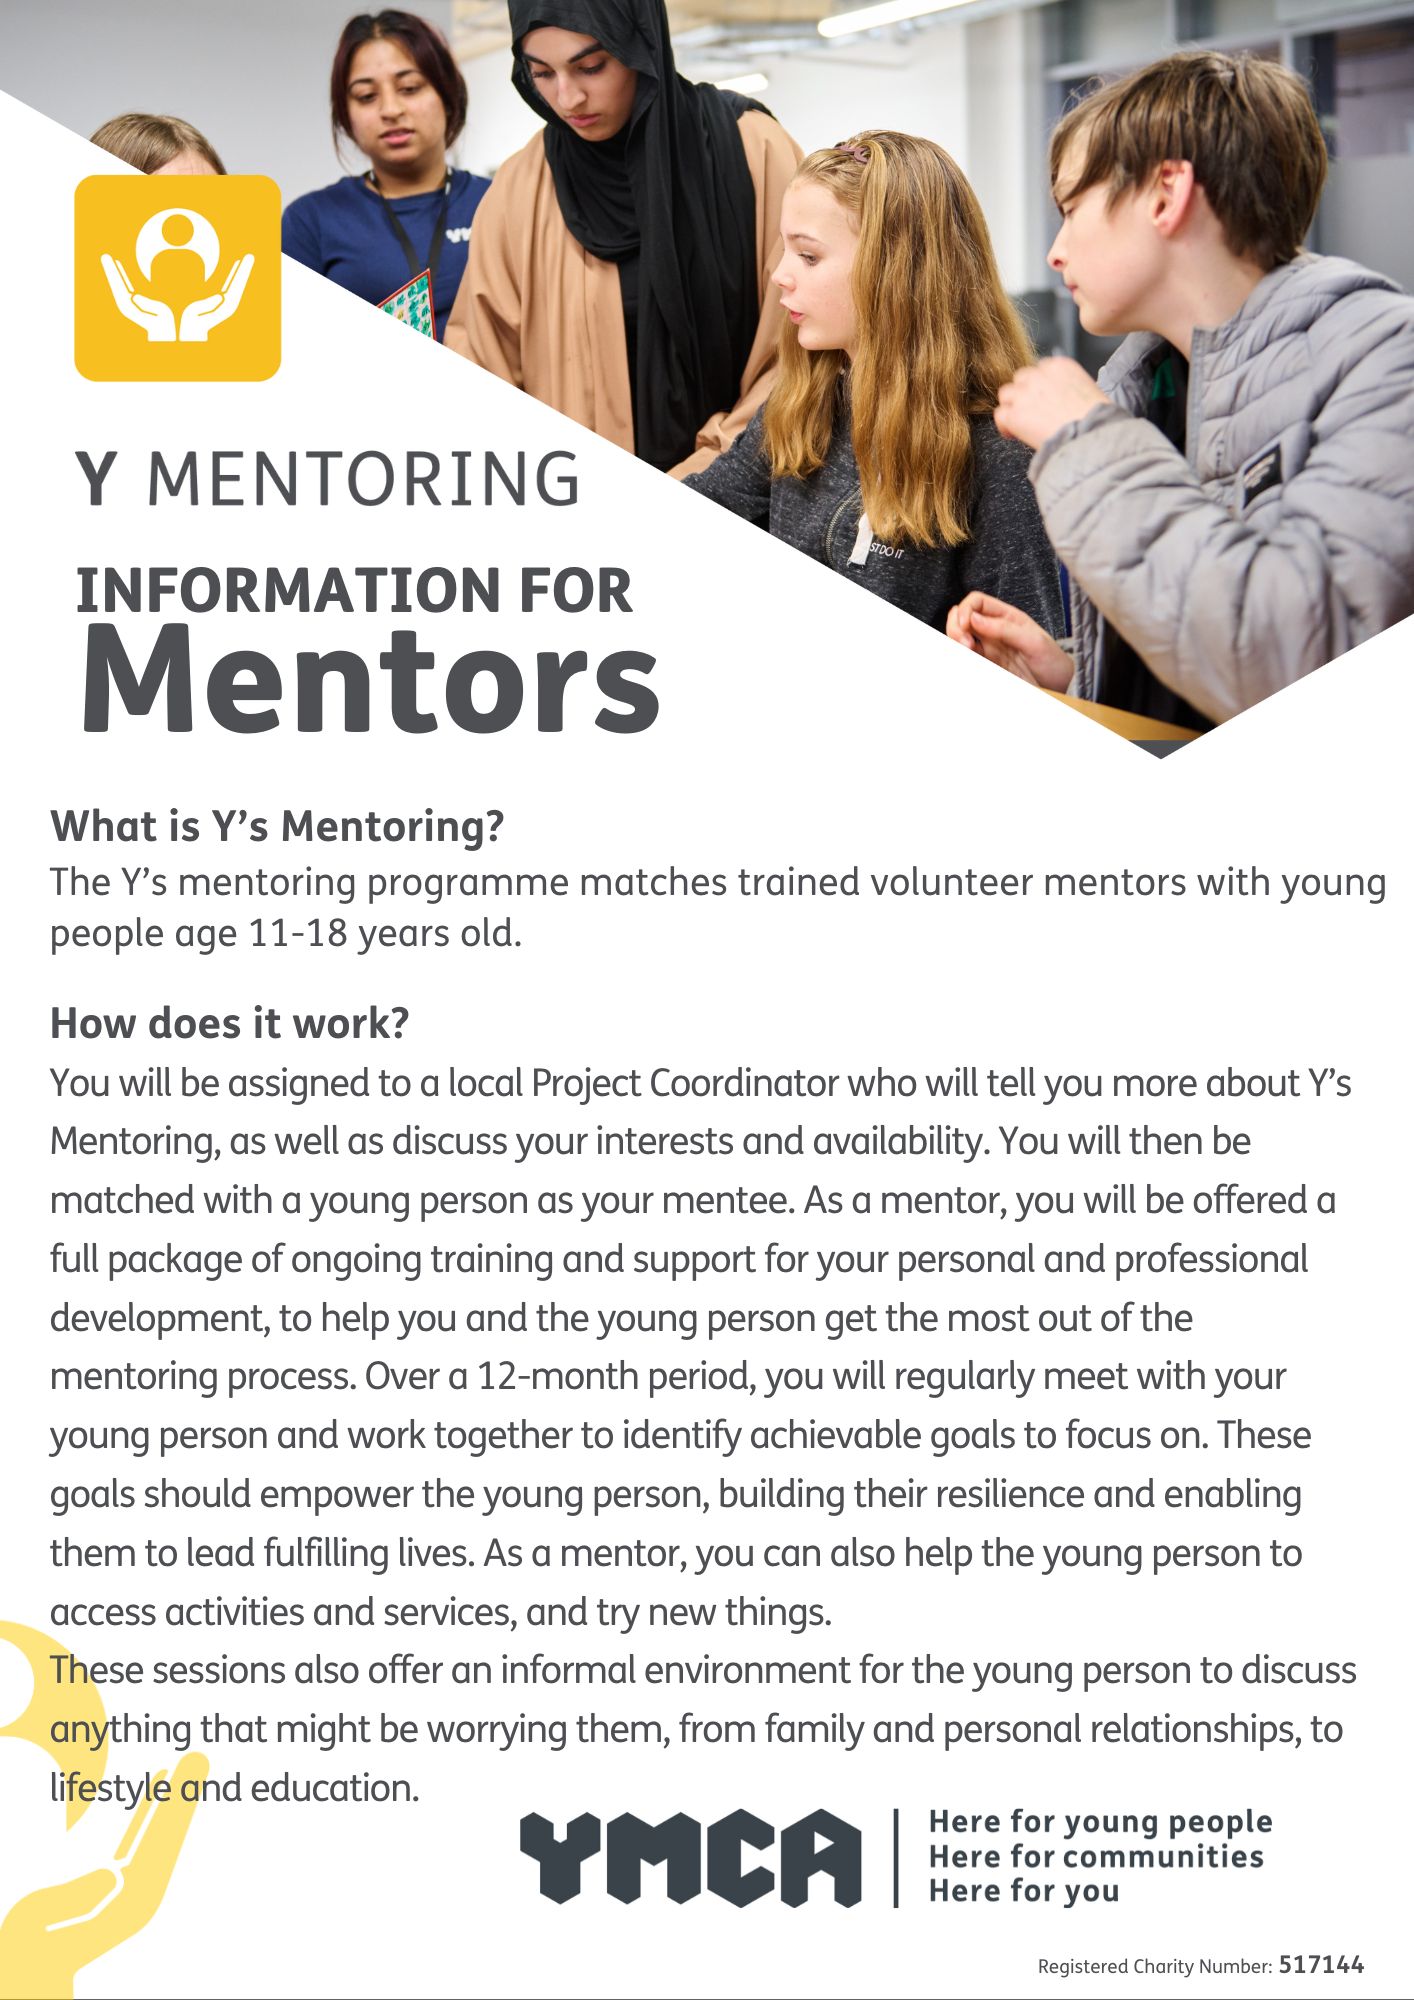 ymca-y-mentoring-leaflet-a